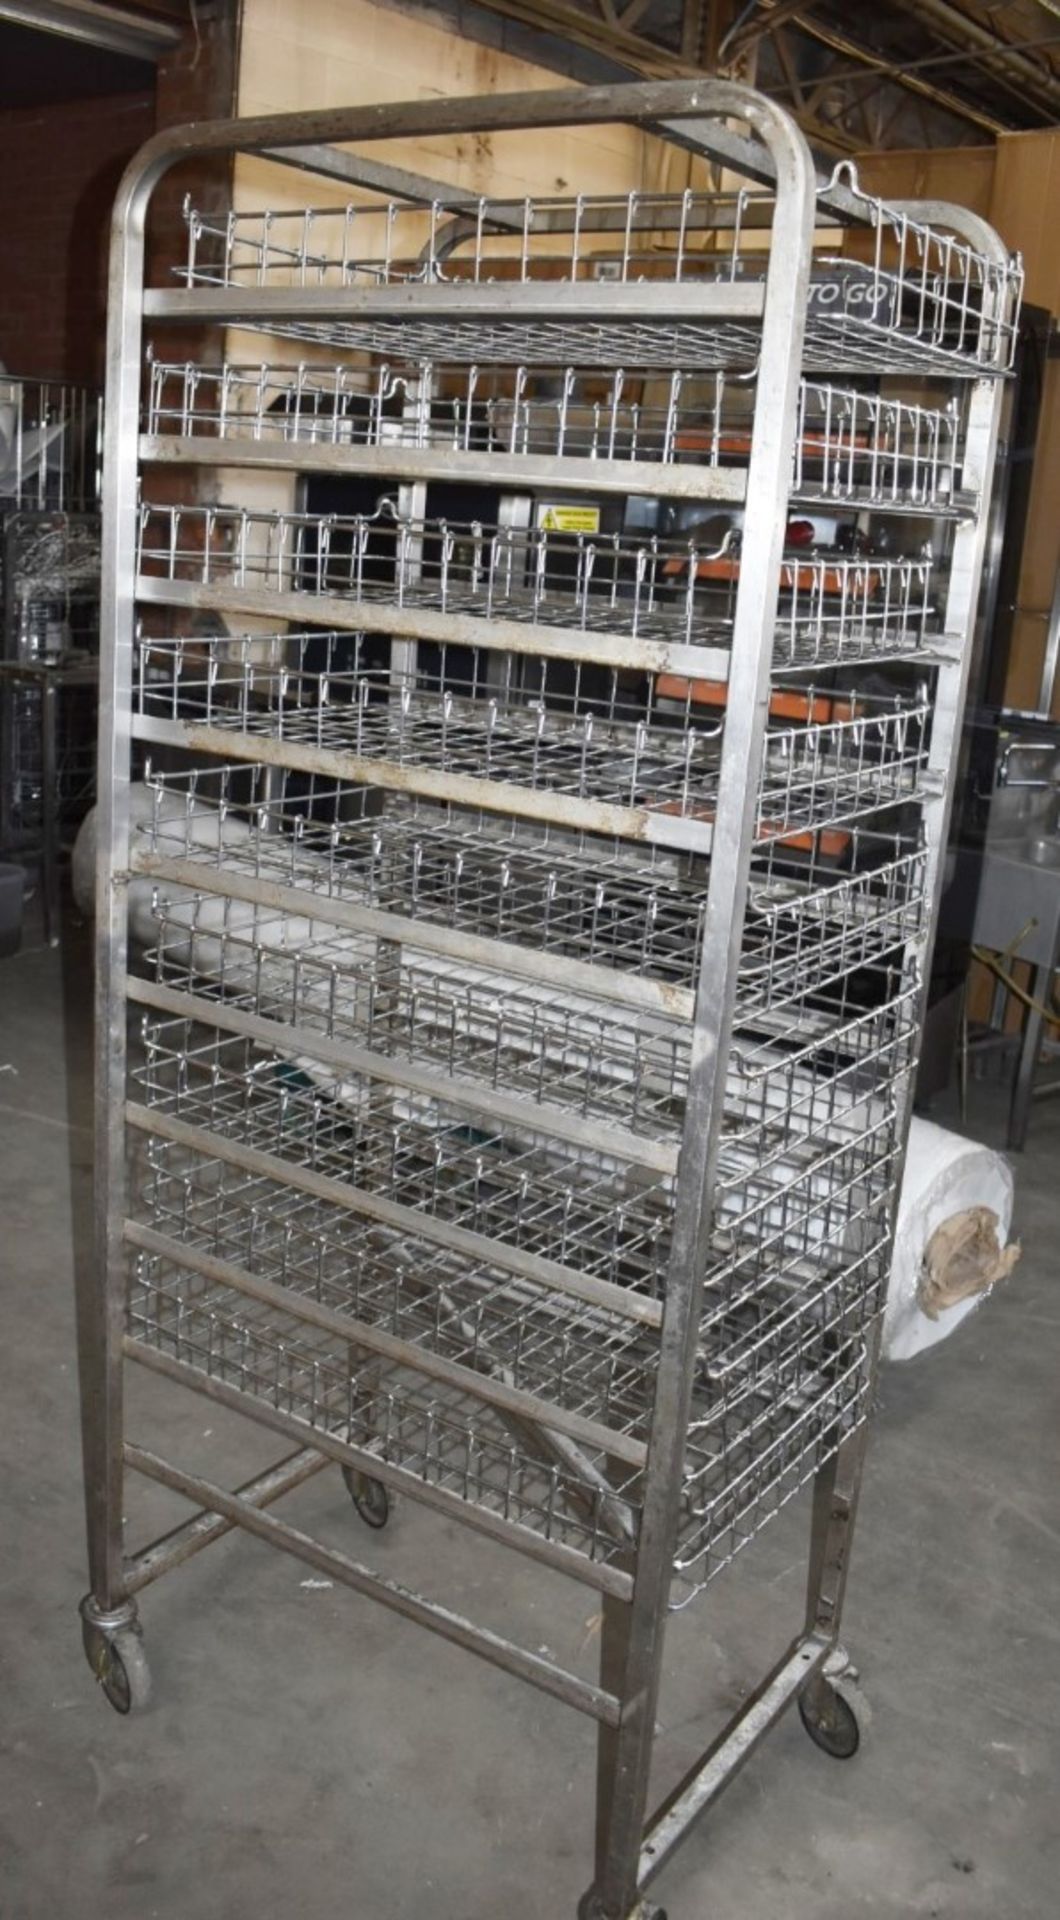 1 x Upright Mobile 10 Tier Shelf Rack With 9 x Chrome Storage Baskets - Dimensions: H180 x W46 x D75 - Image 5 of 5